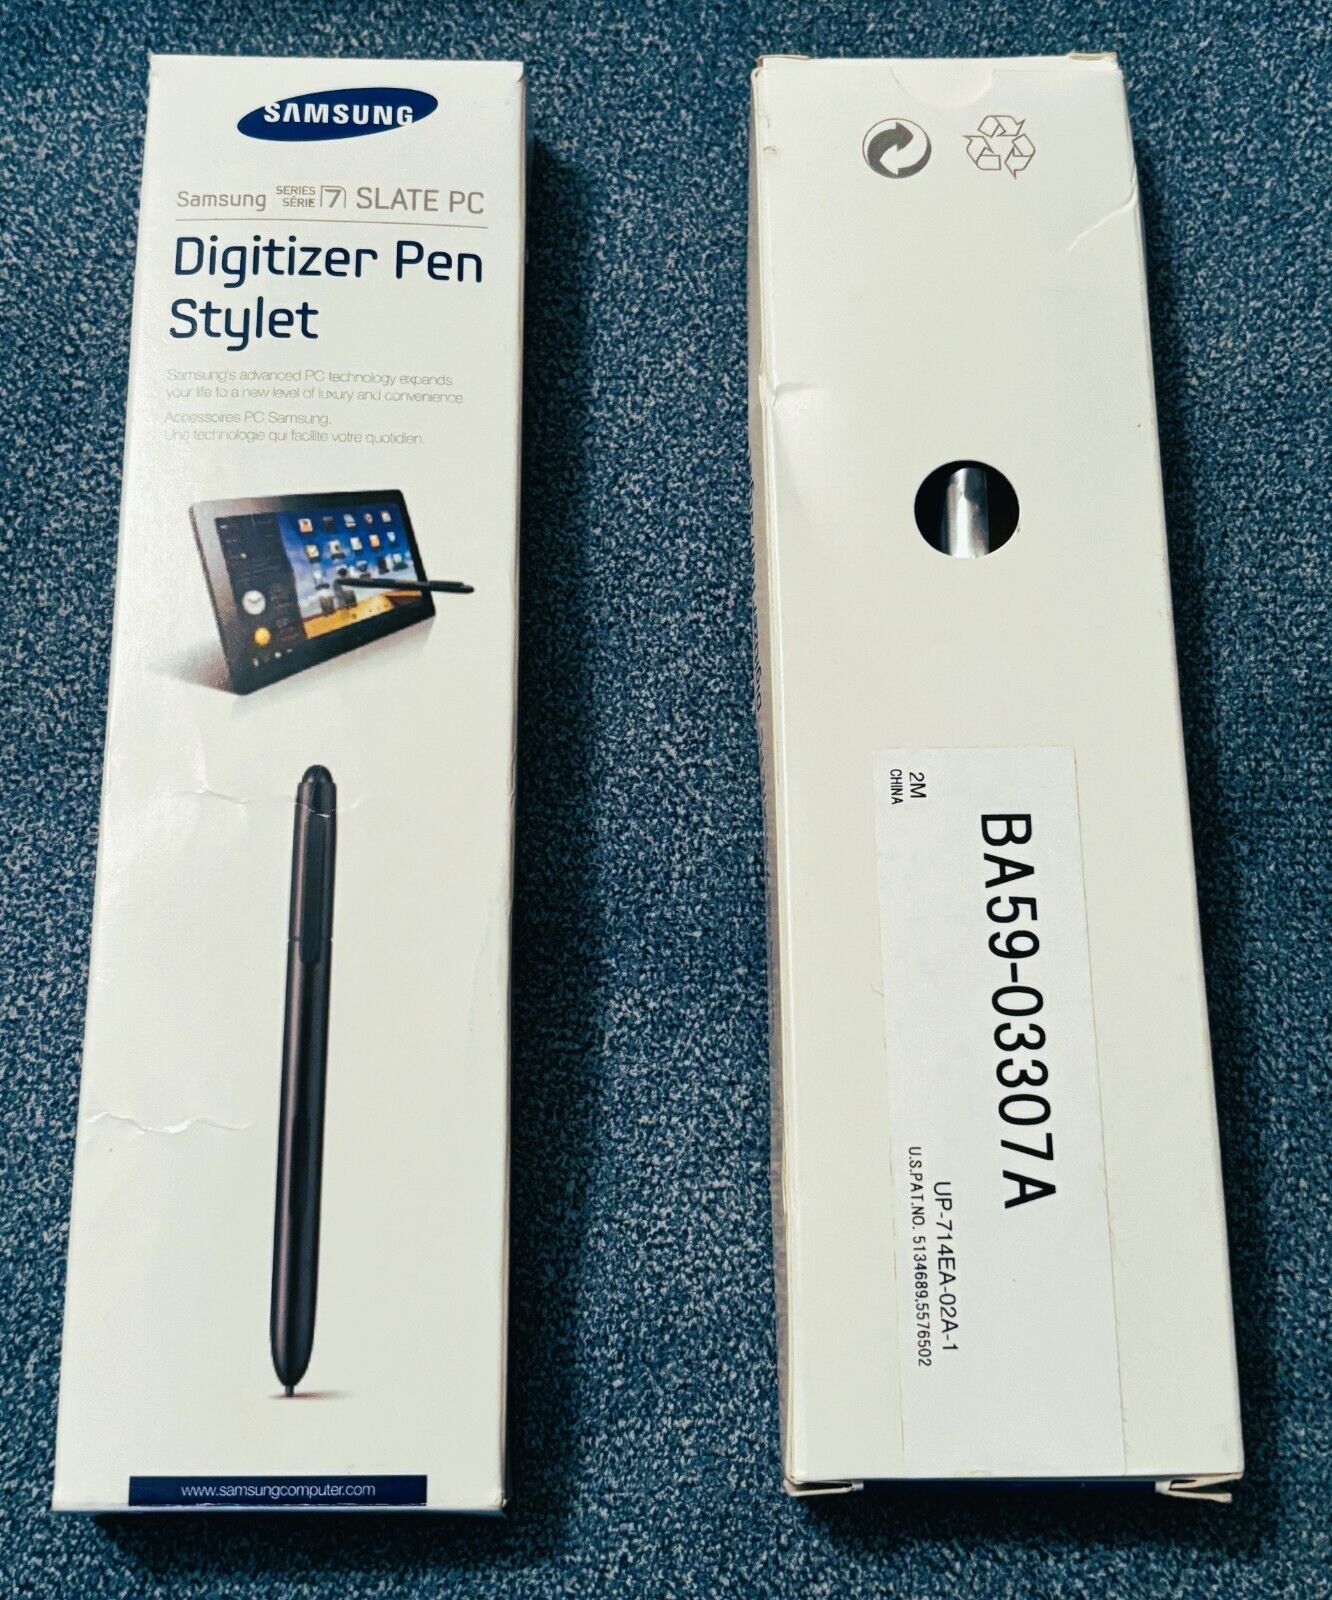 Samsung Series 7 Slate PC Digitizer Pen Stylet - BA59-03307A